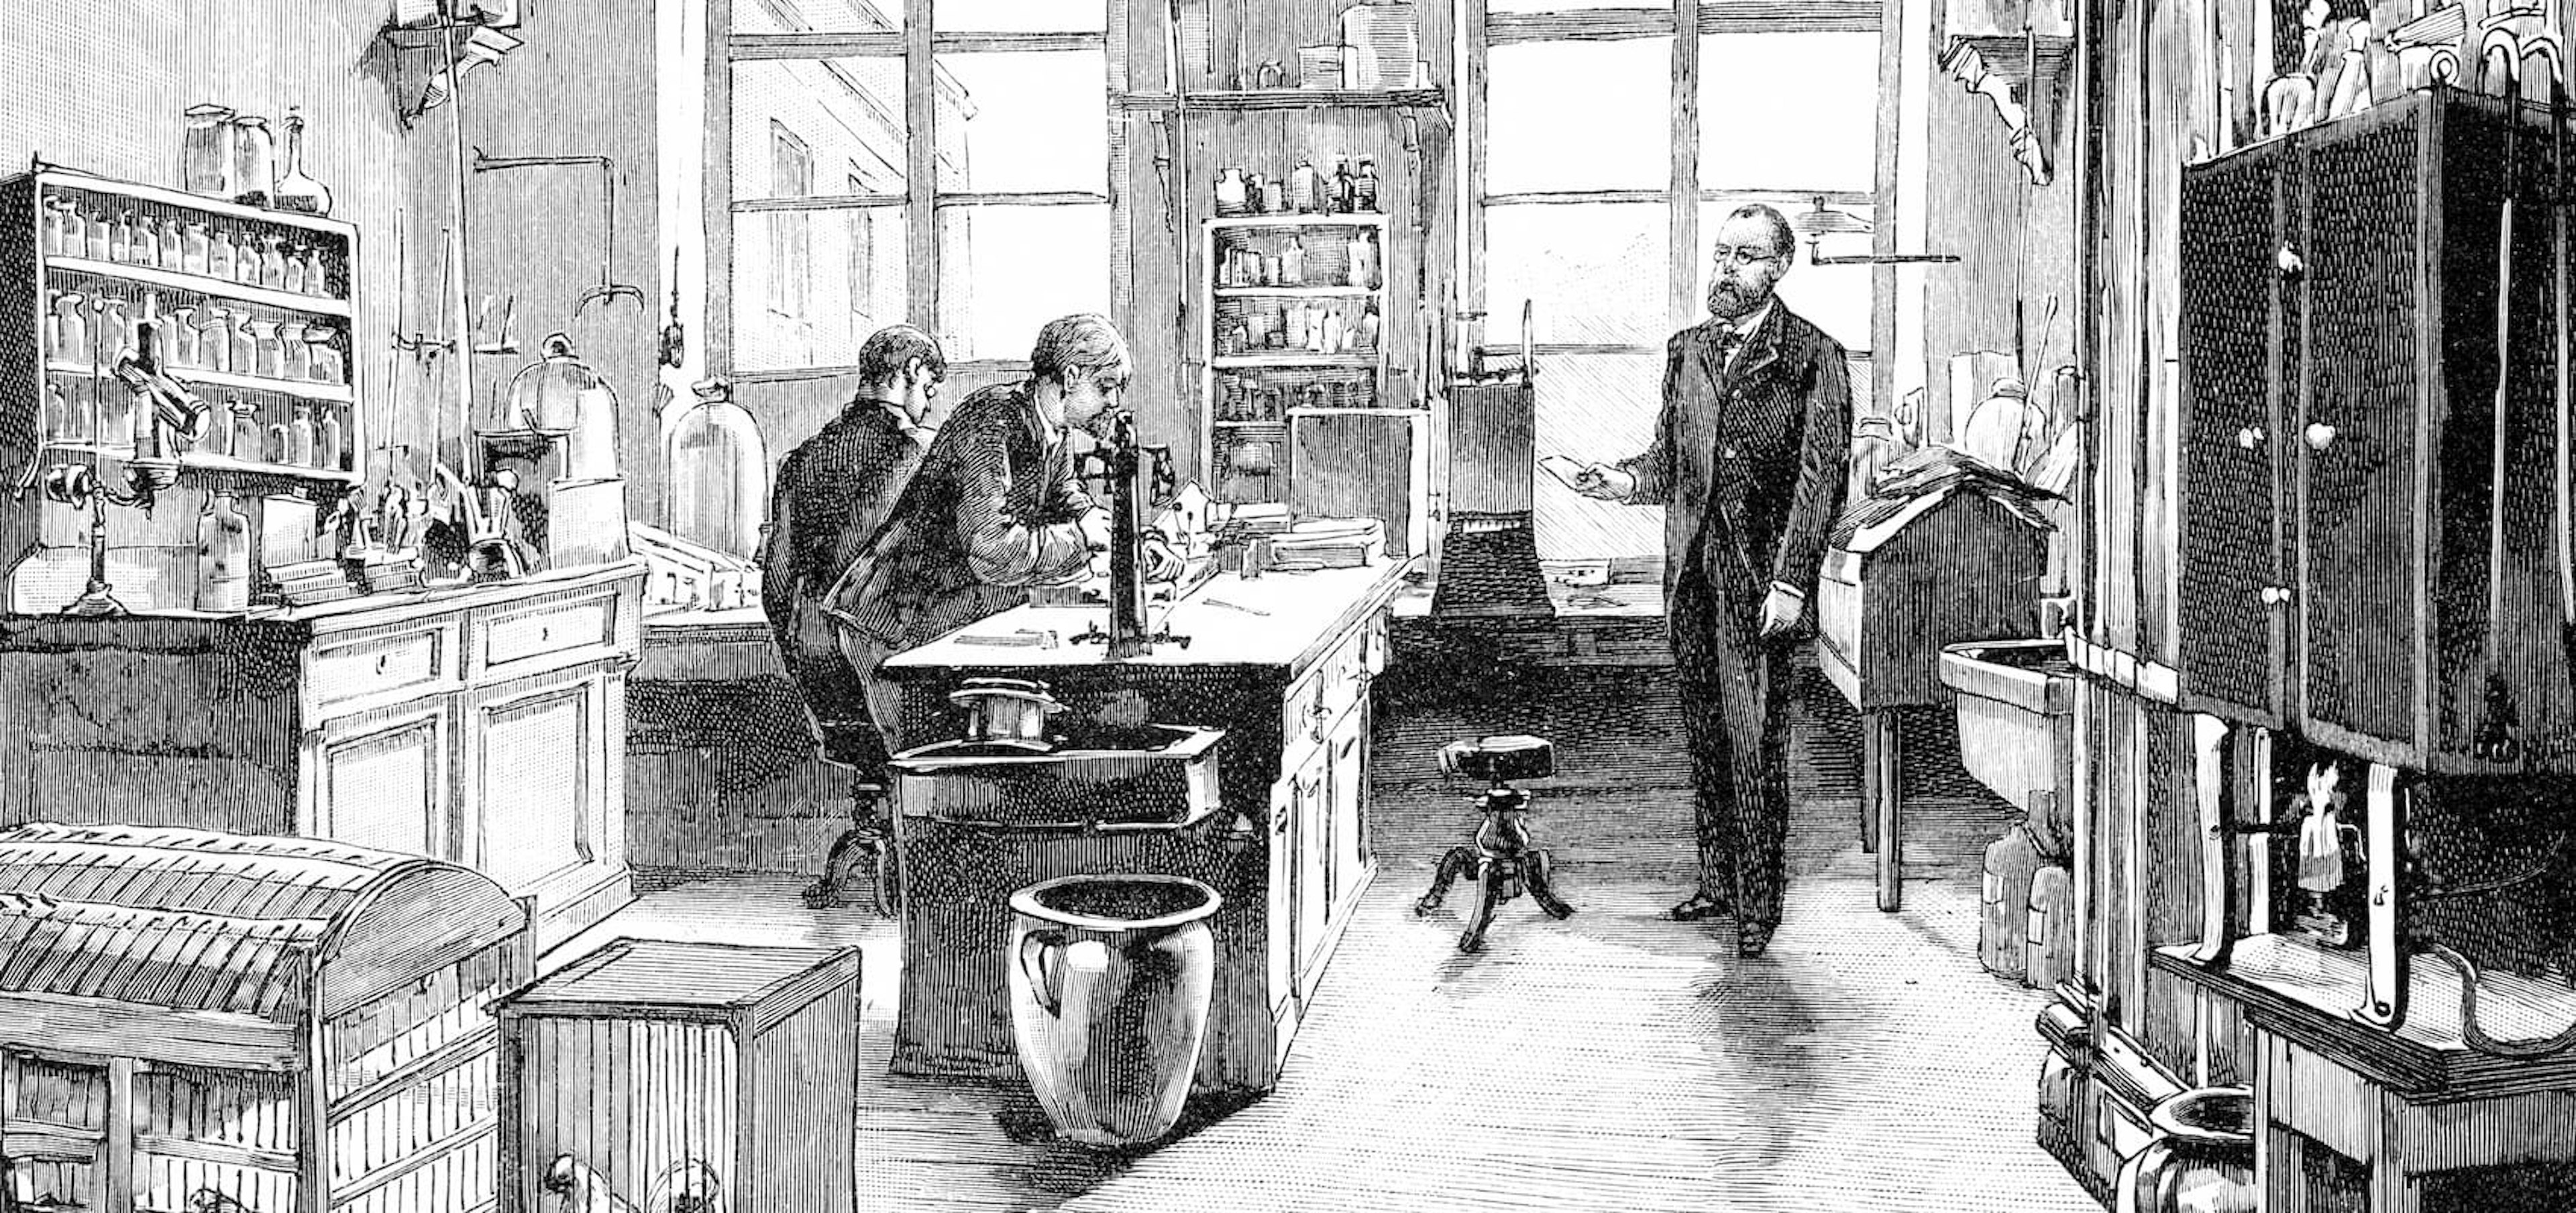 Robert Koch in lab